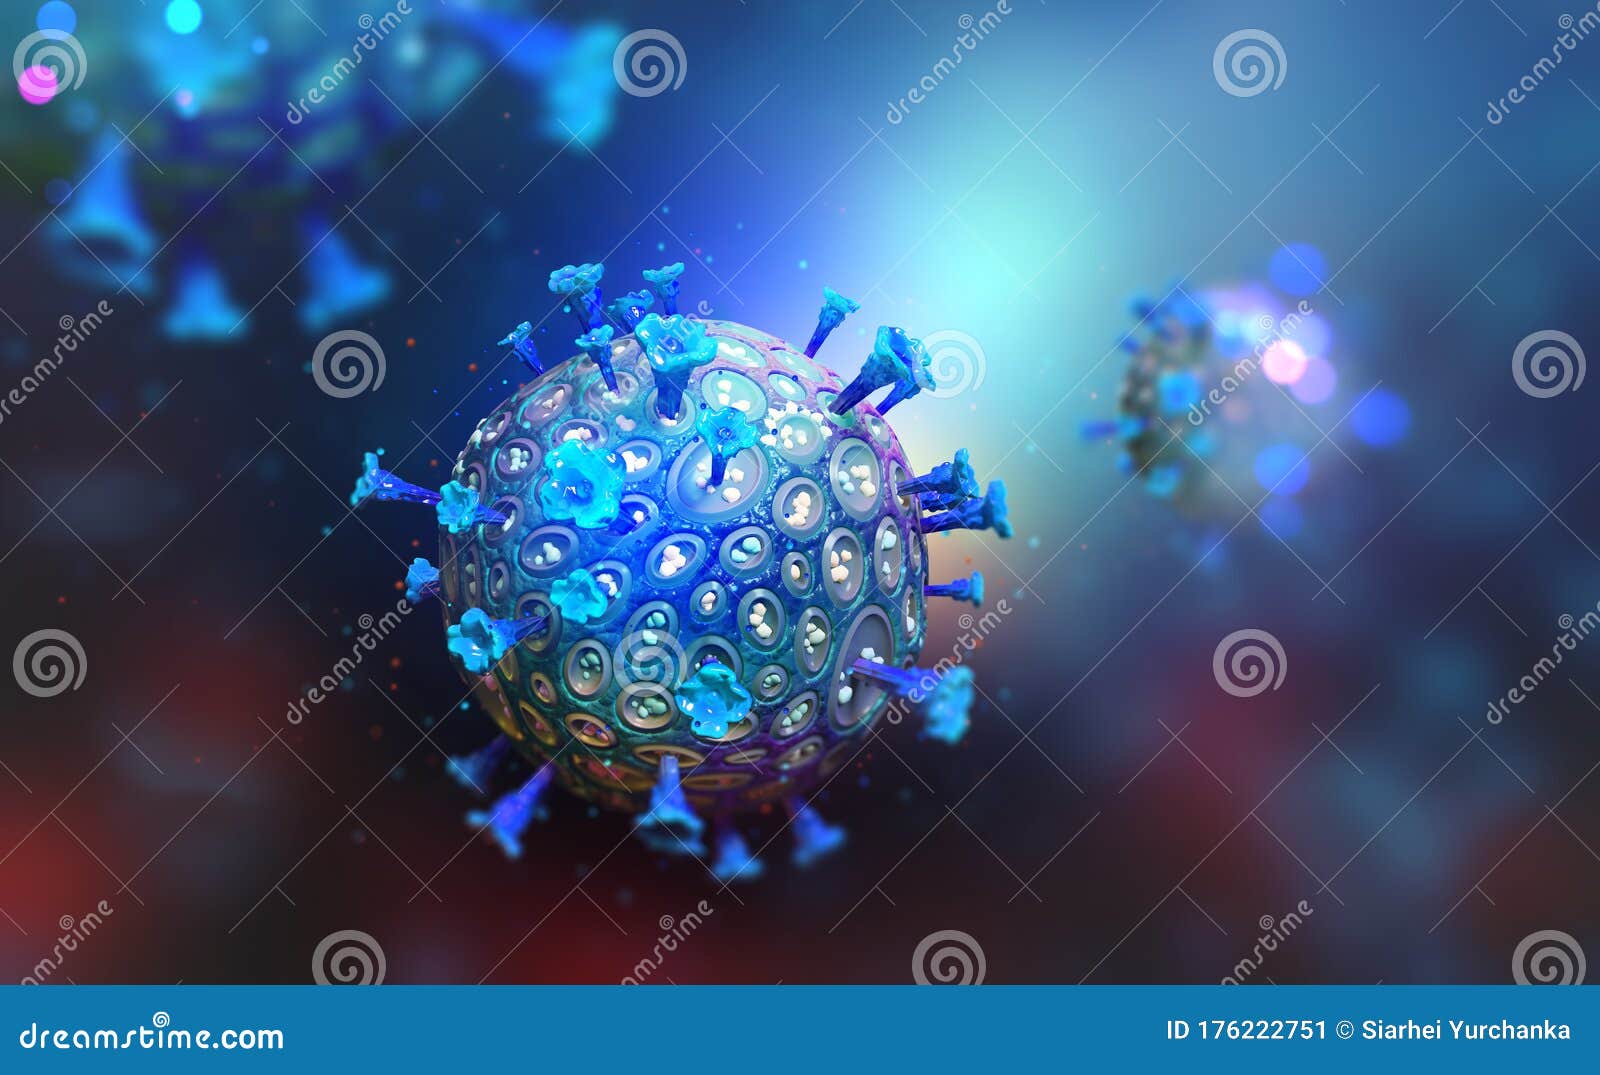 virus under microscope. germs, microbe, bacterium, pathogen organism